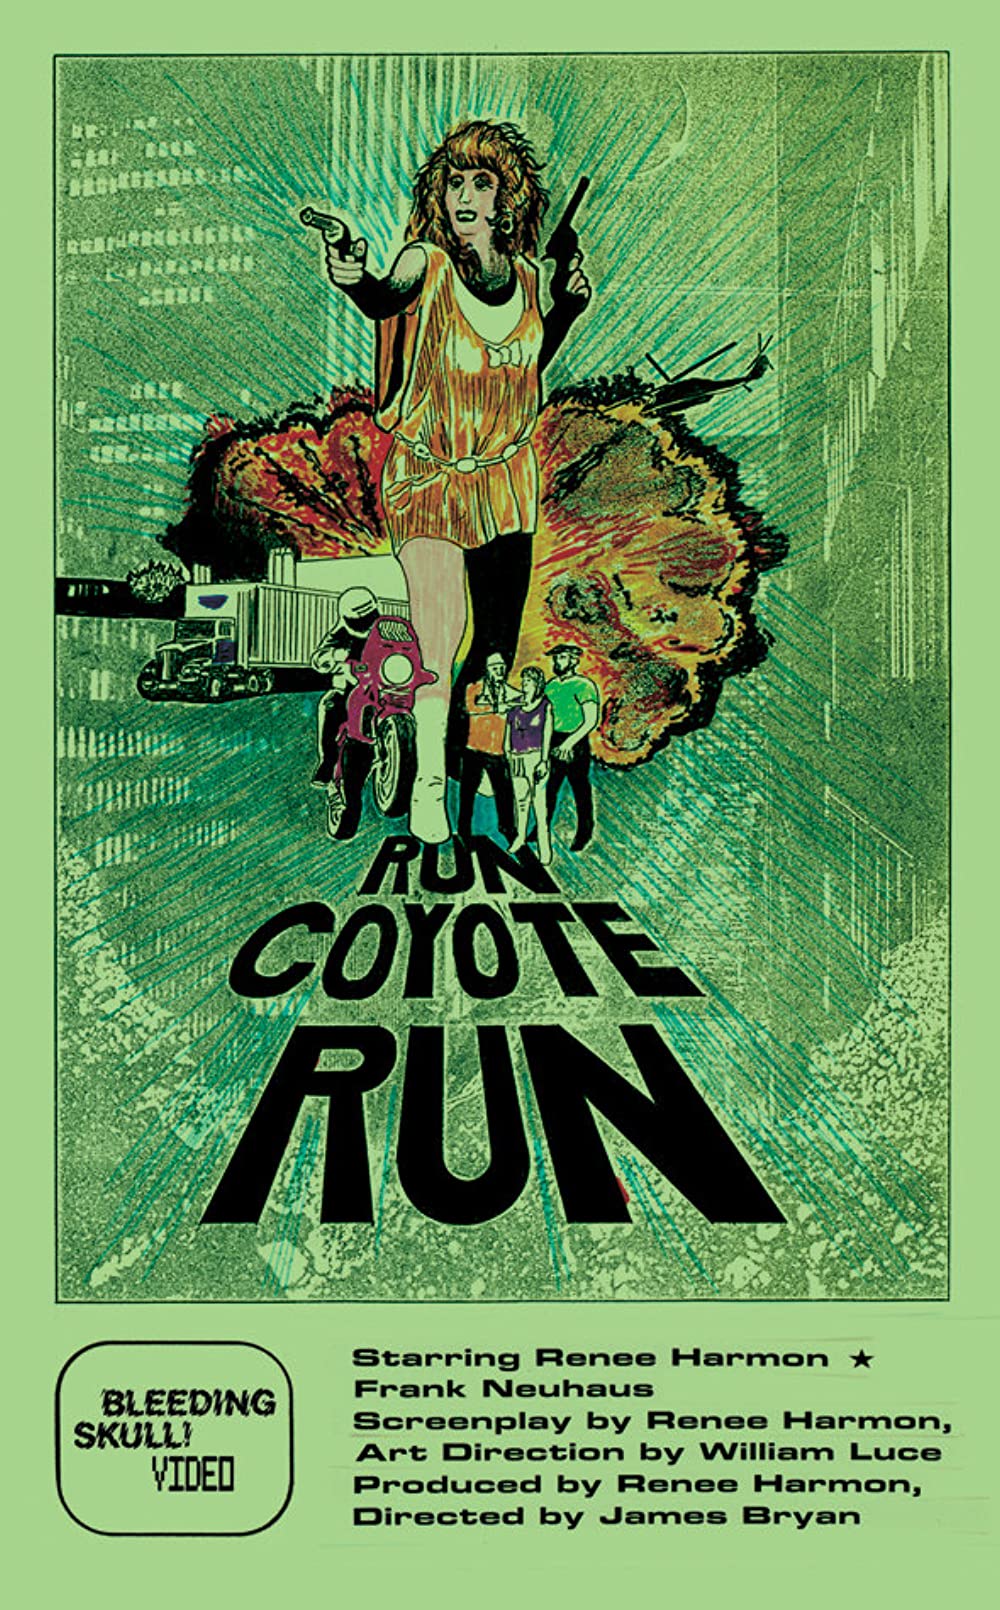 Run Coyote Run - Darkside Records